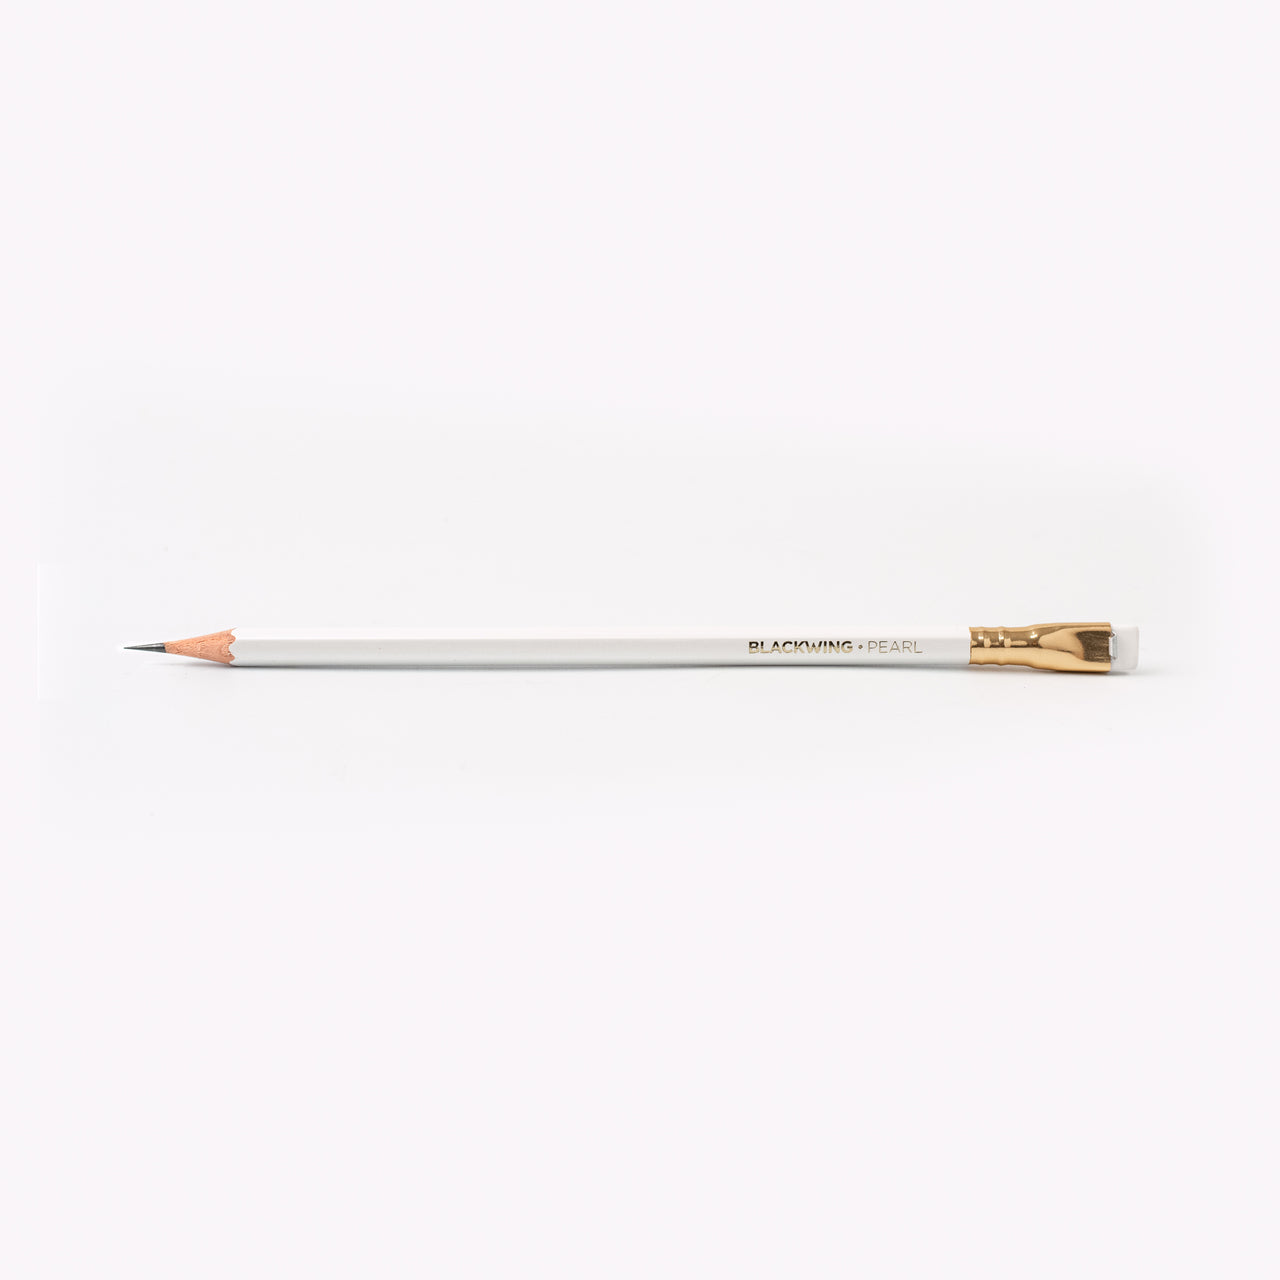 Blackwing Pearl "Balanced" Pencil- single sharpened pencil